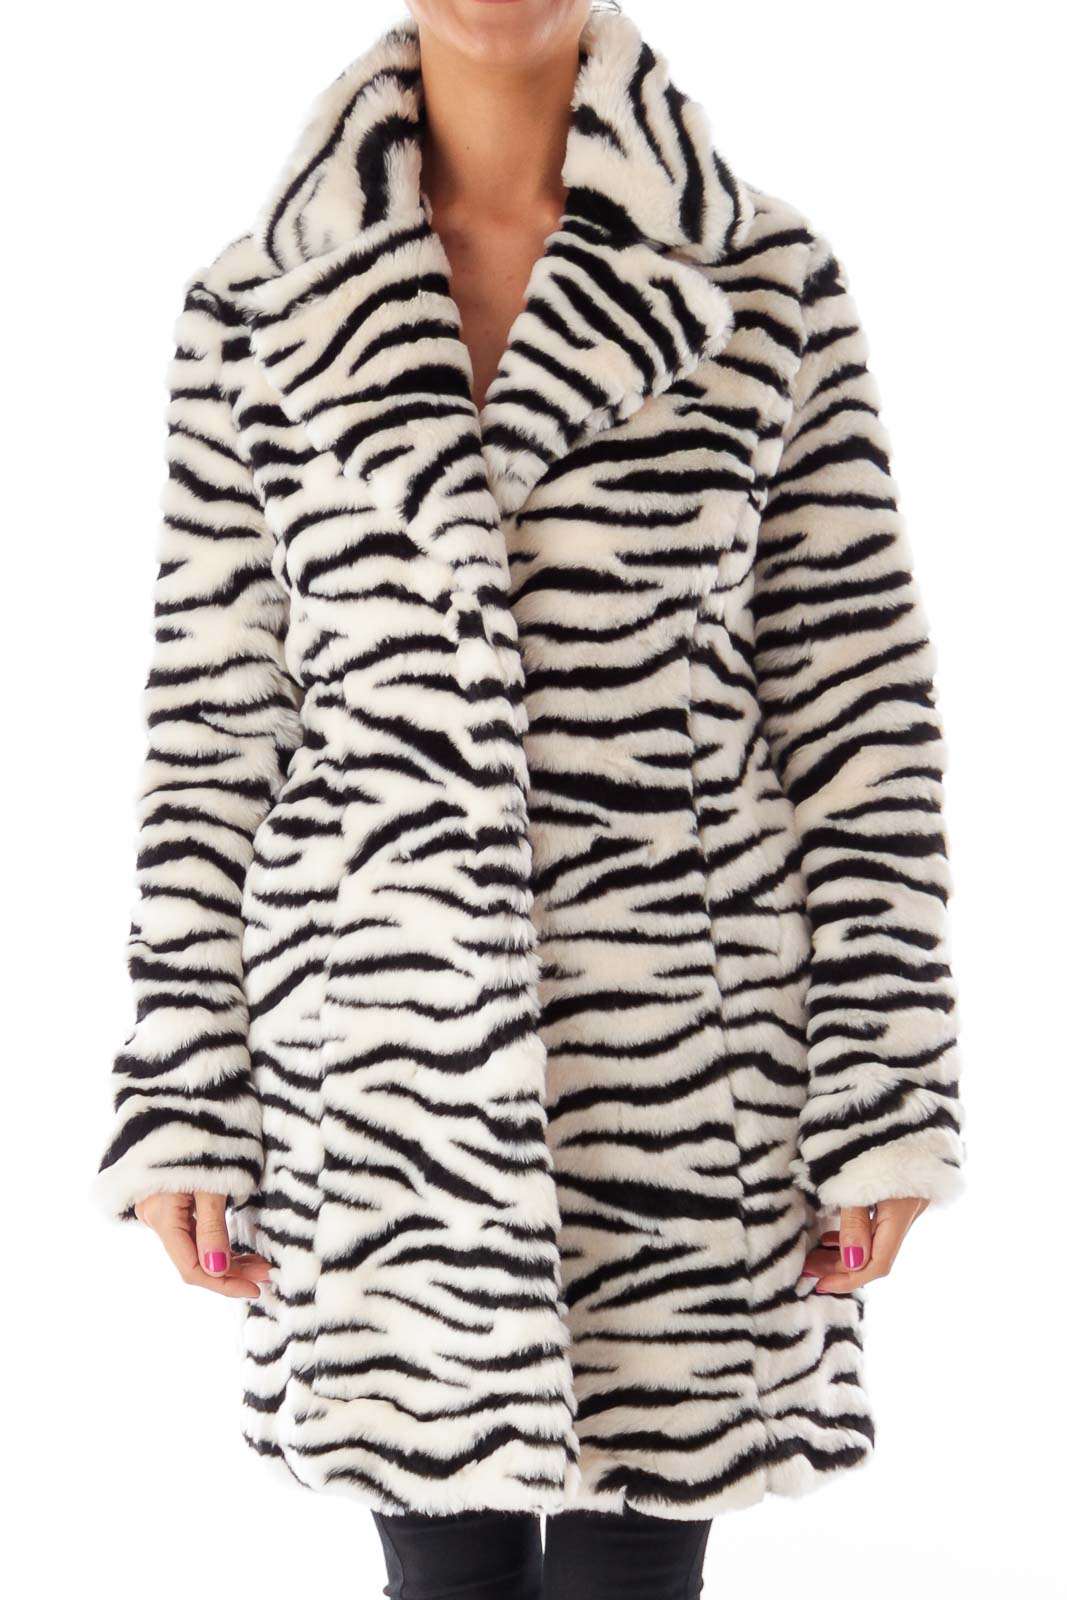 Black & White Zebra Faux Fur Coat Front